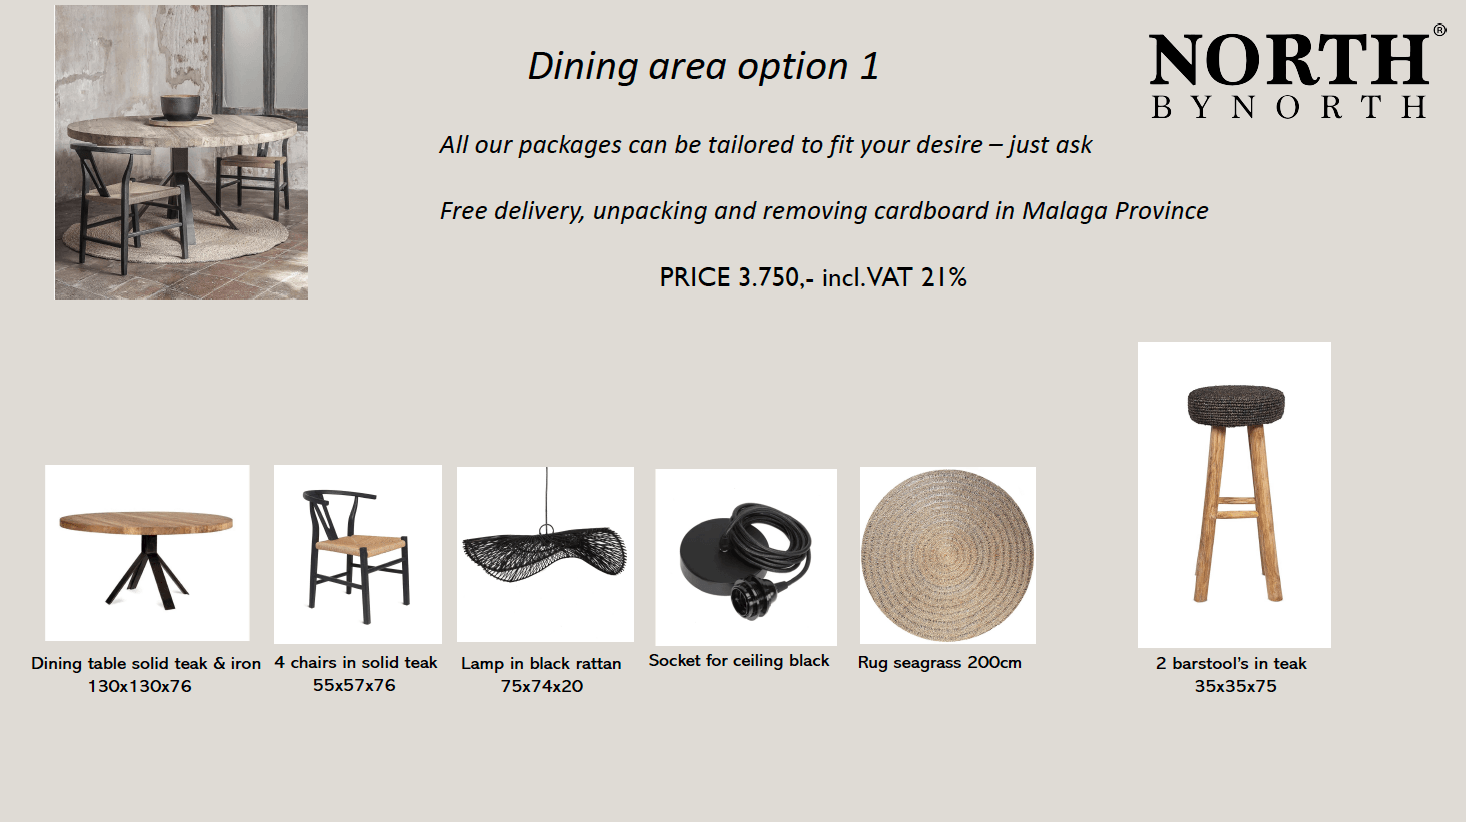 Dining area option 1